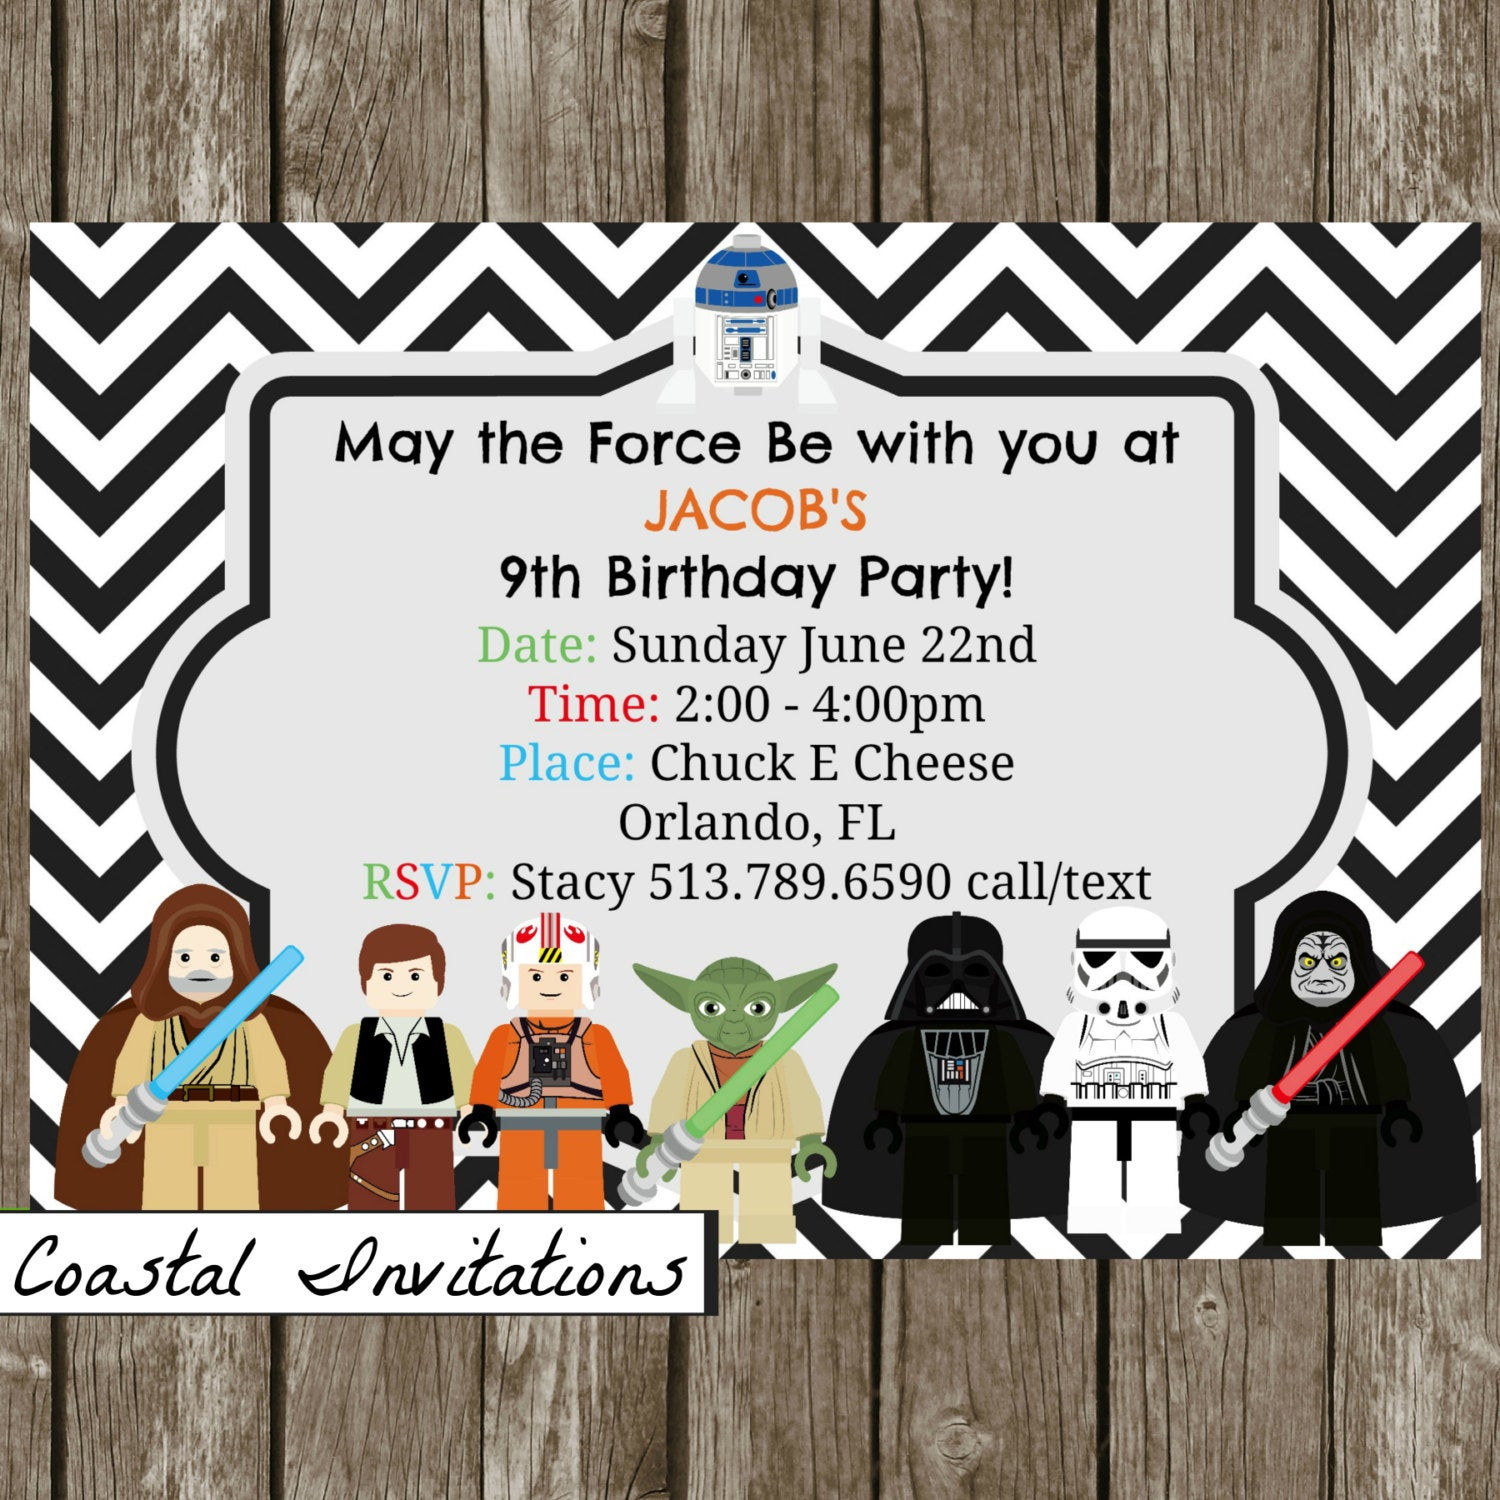 Star Wars Birthday Party Invitation
 Lego Star Wars Birthday Party Invitation by CoastalInvitations